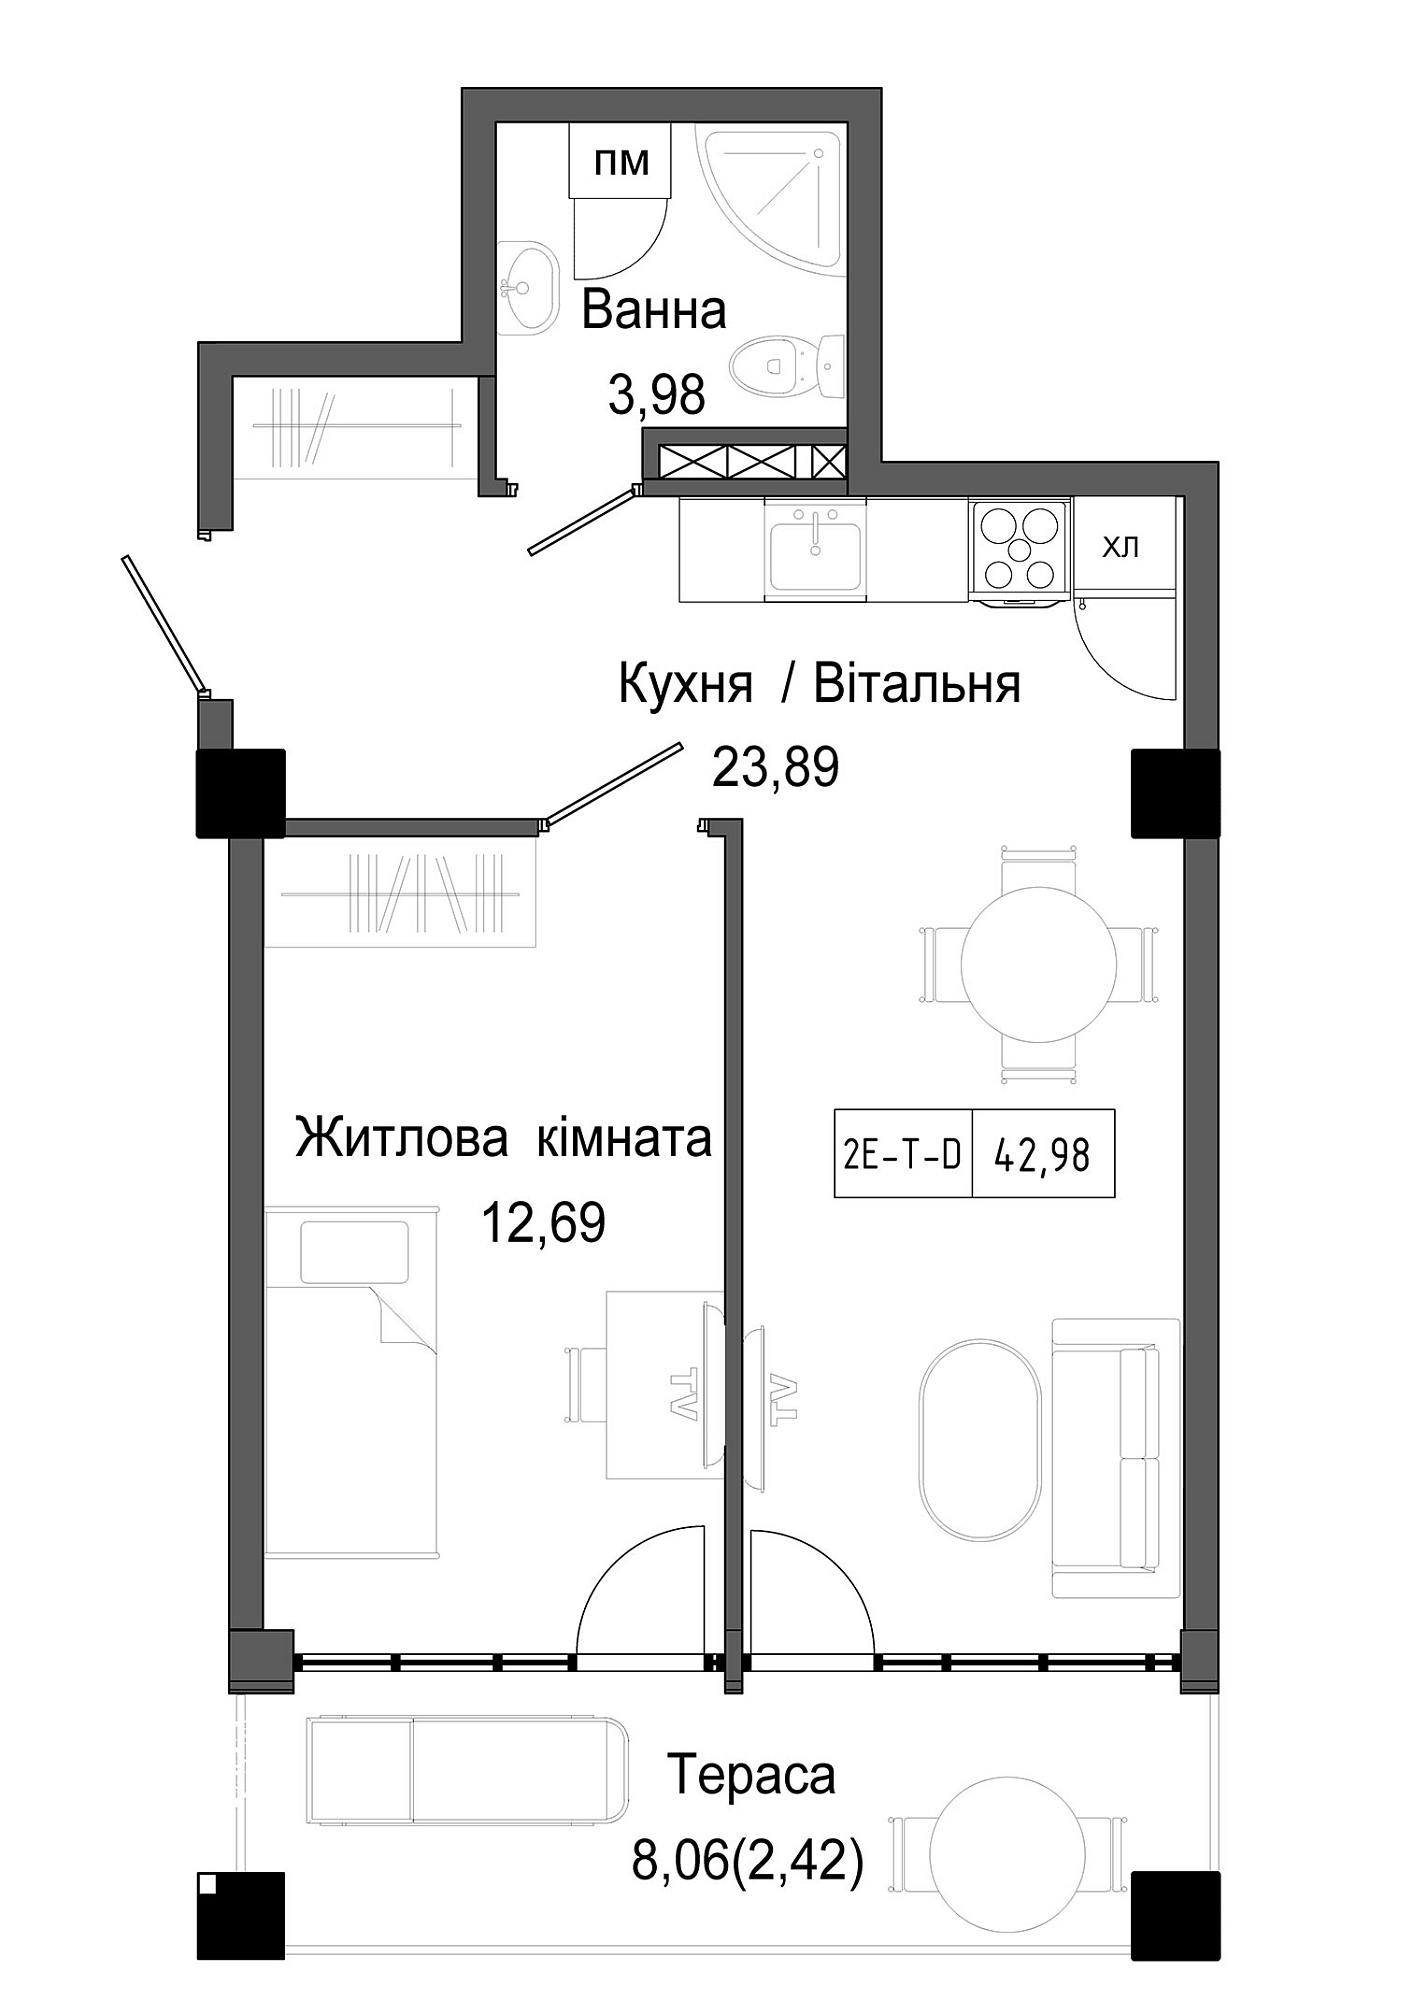 Planning 1-rm flats area 42.98m2, UM-006-01/0006.